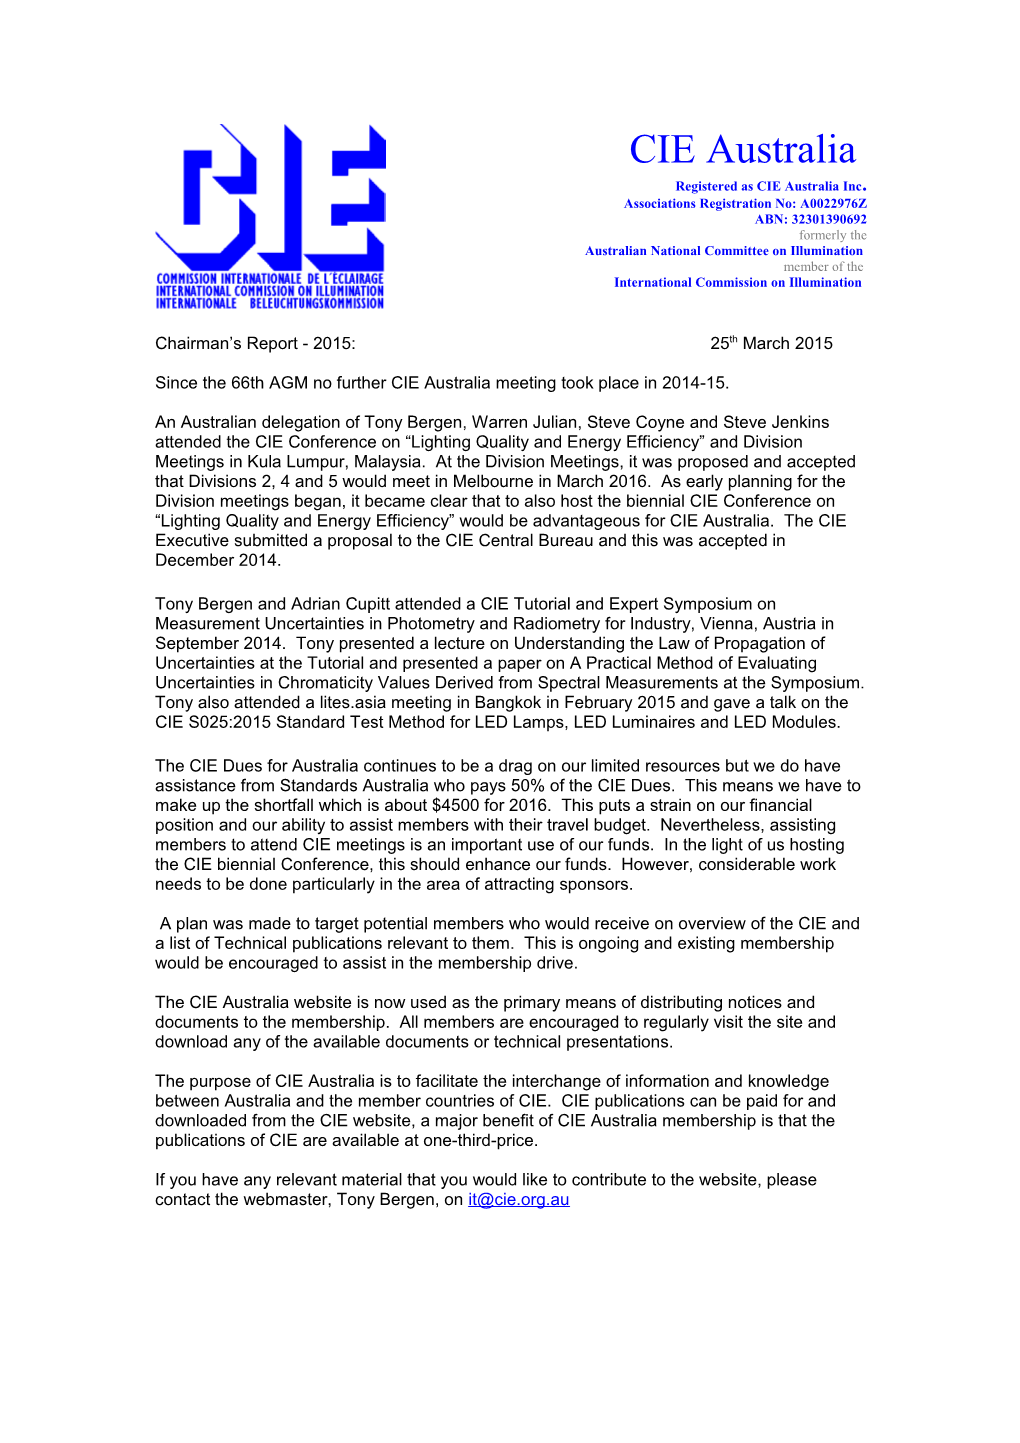 Notice of Meeting of CIE Australia